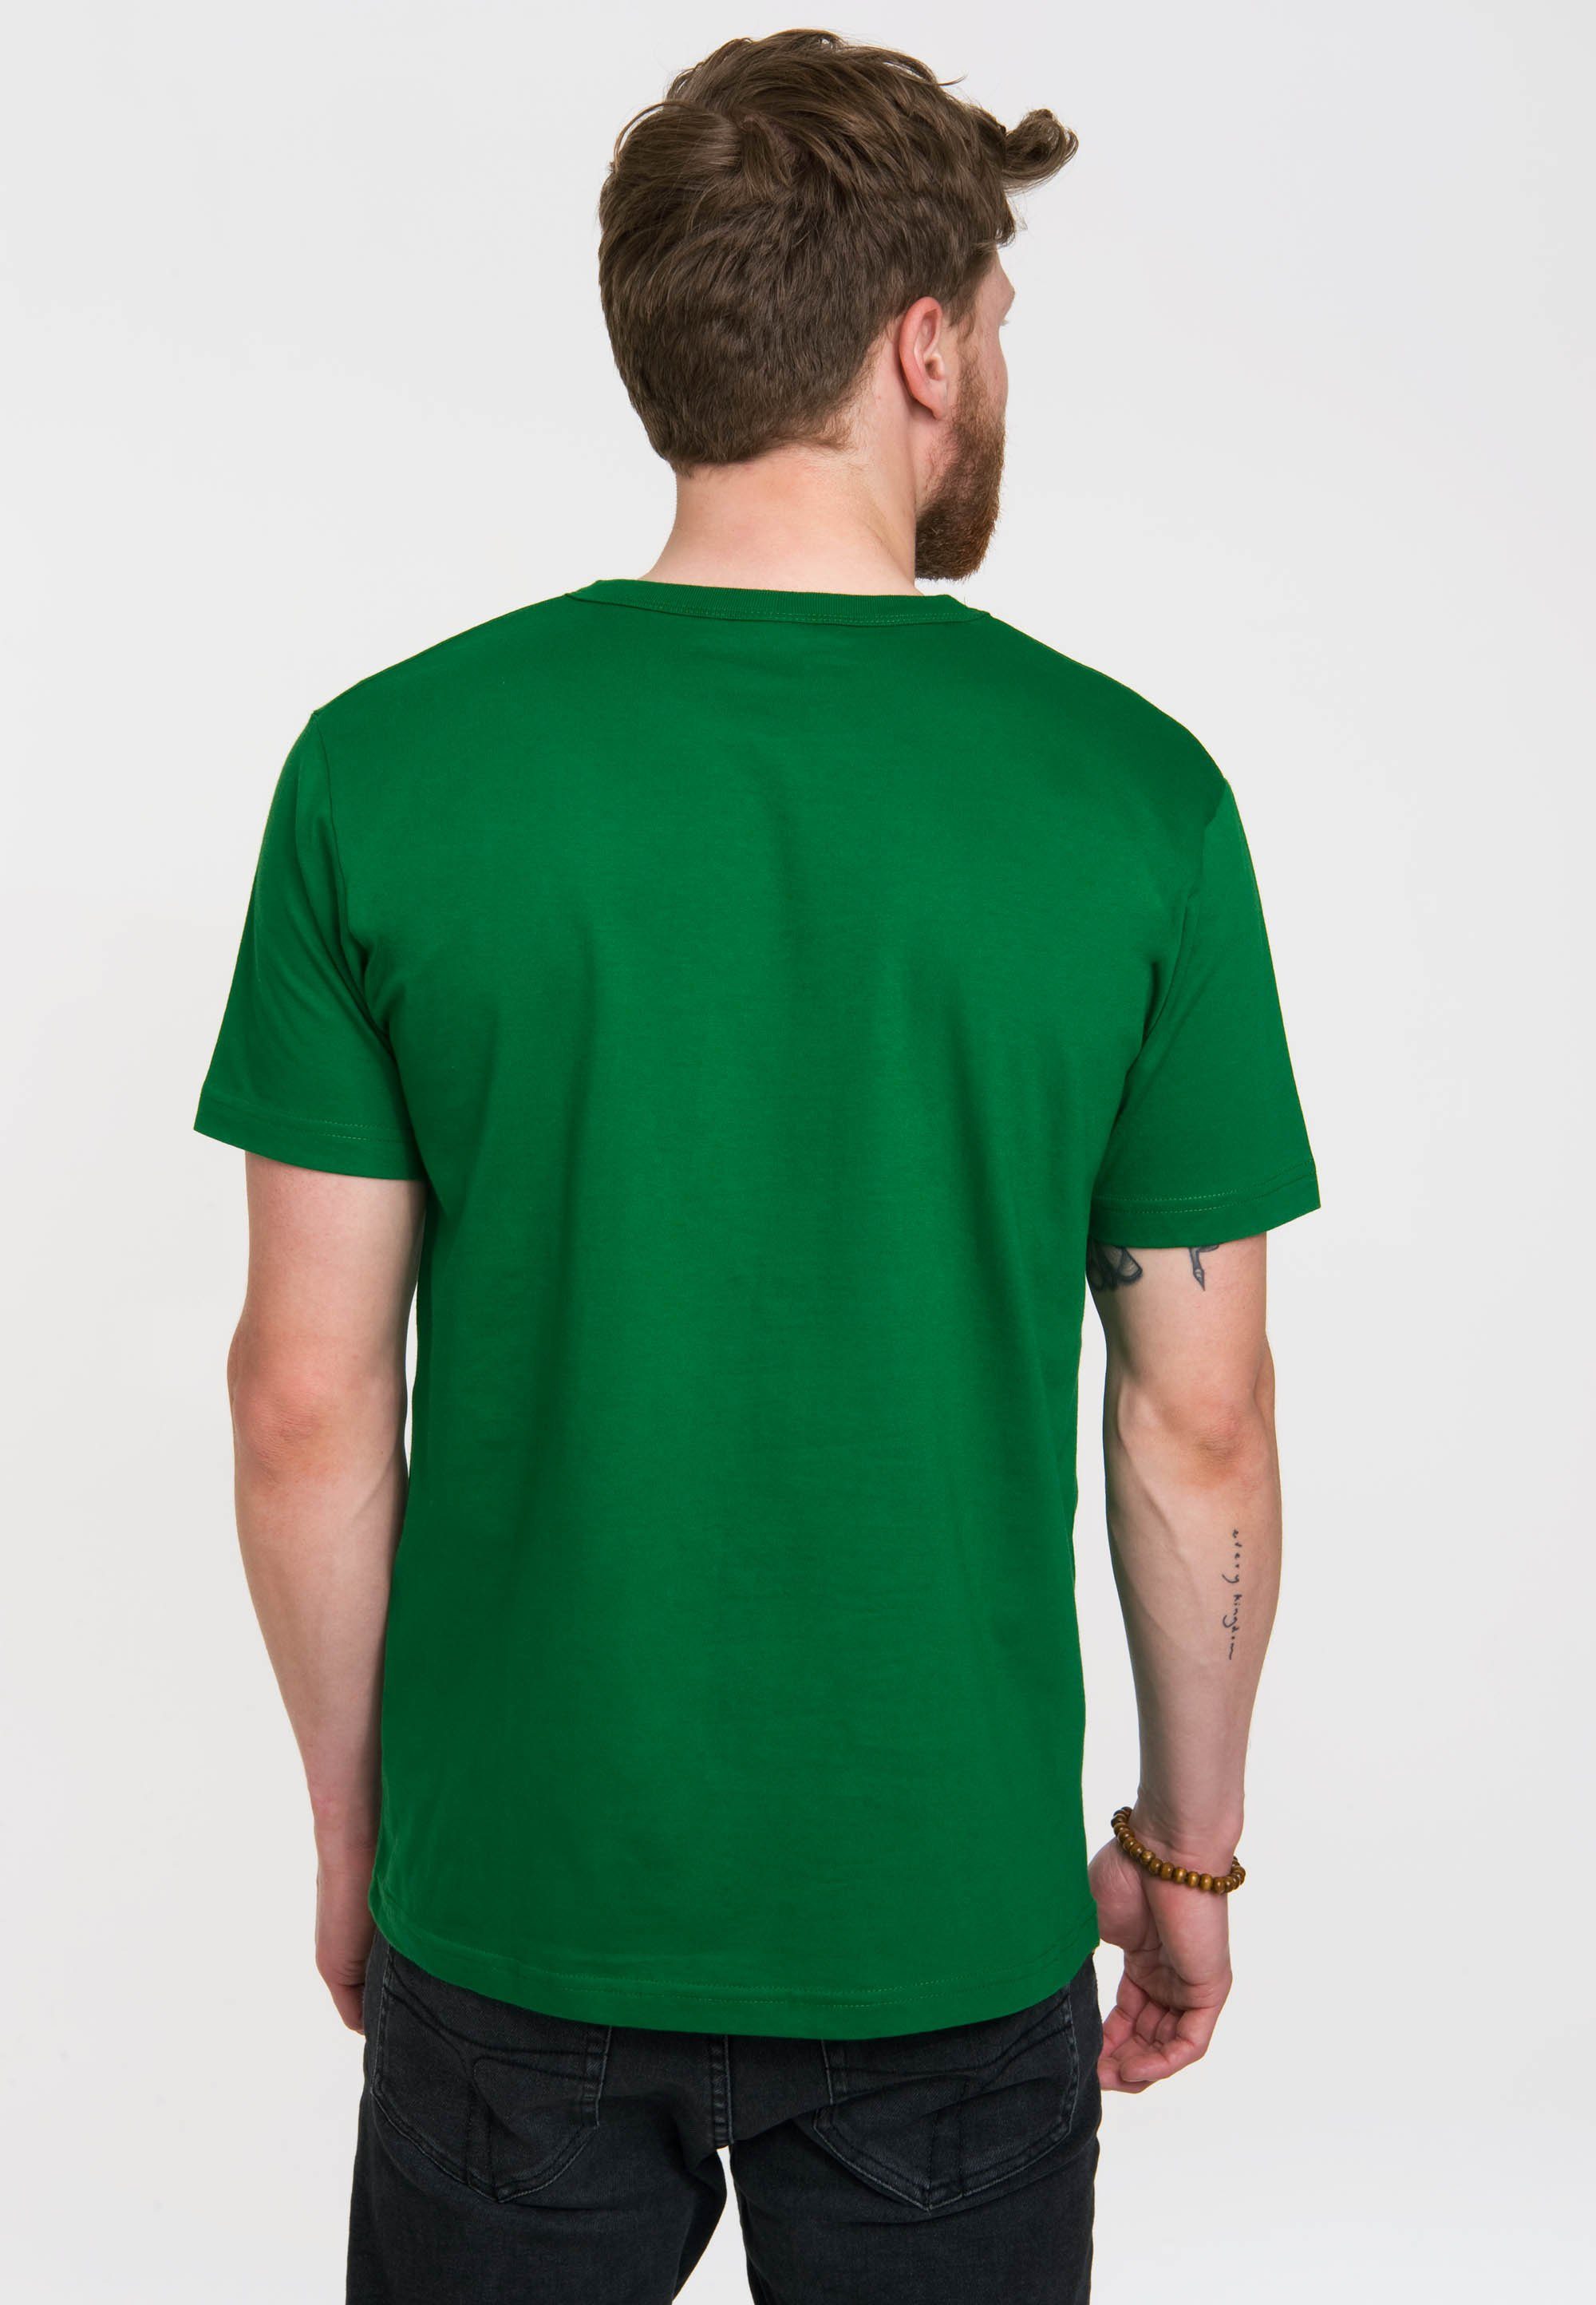 Gonzales Print Speedy - mit grün Arriba! T-Shirt - LOGOSHIRT Speedy Gonzales